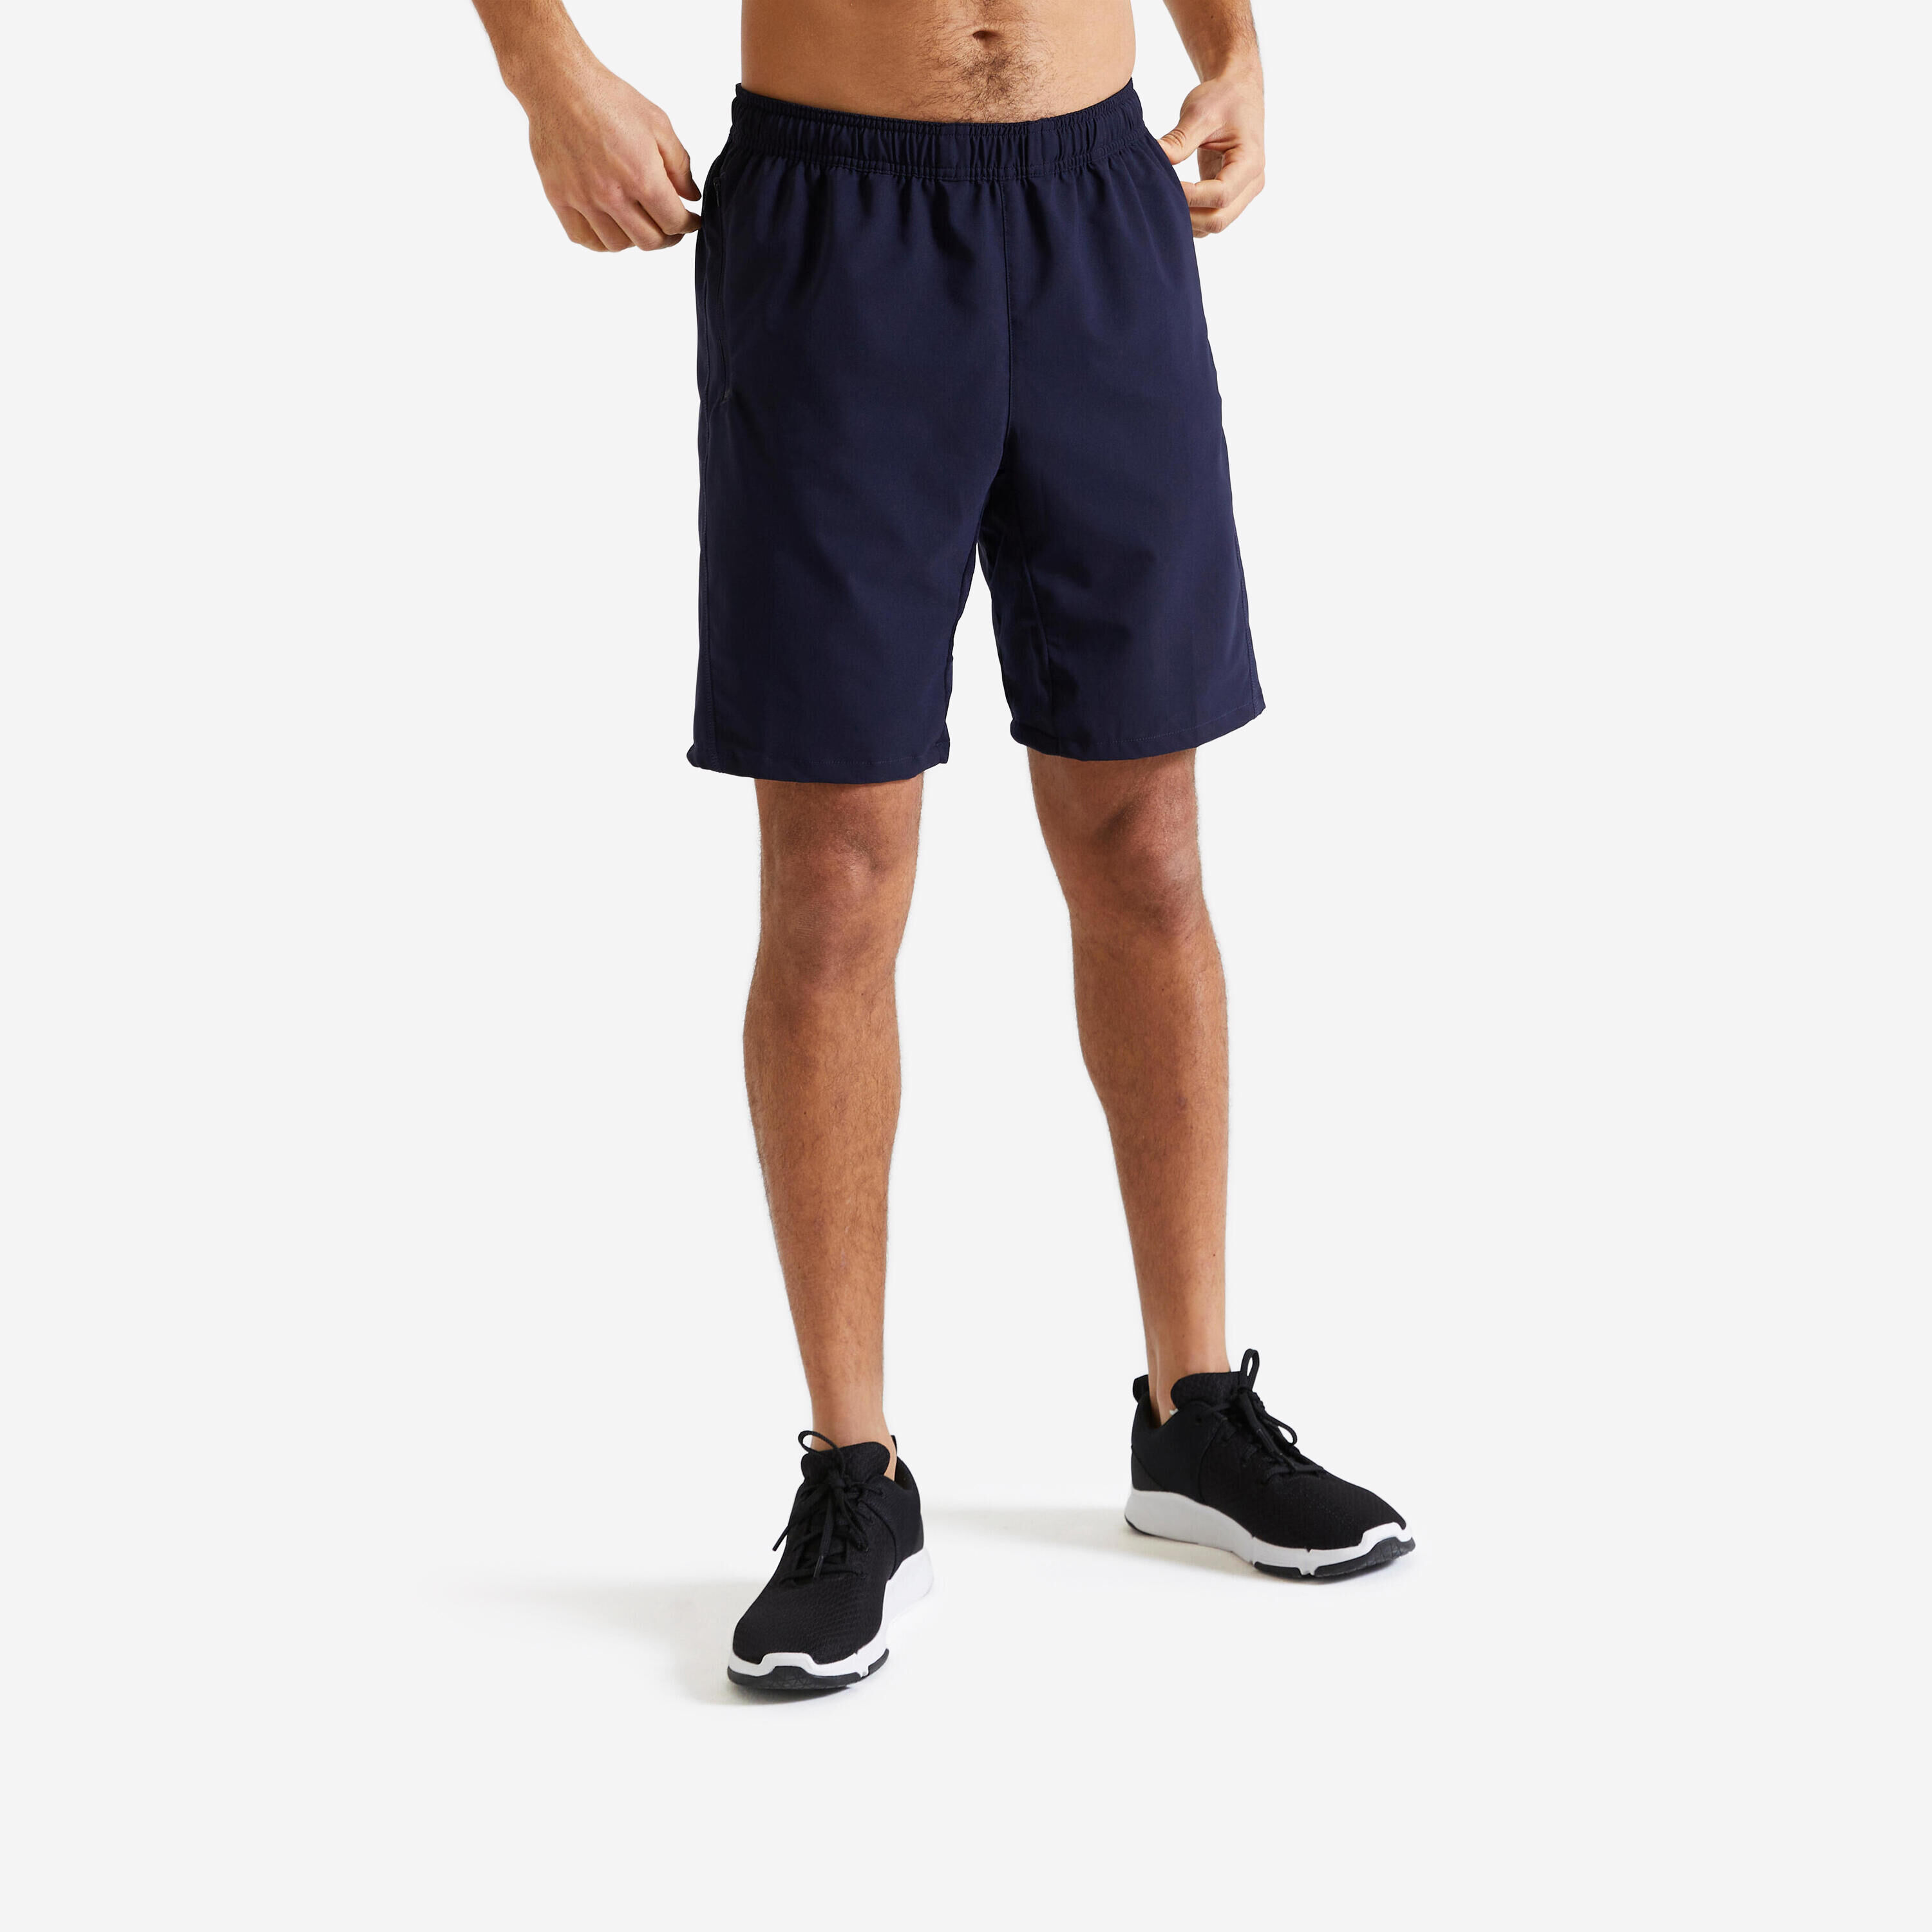 DOMYOS Men's Zip Pocket Breathable Essential Fitness Shorts - Navy